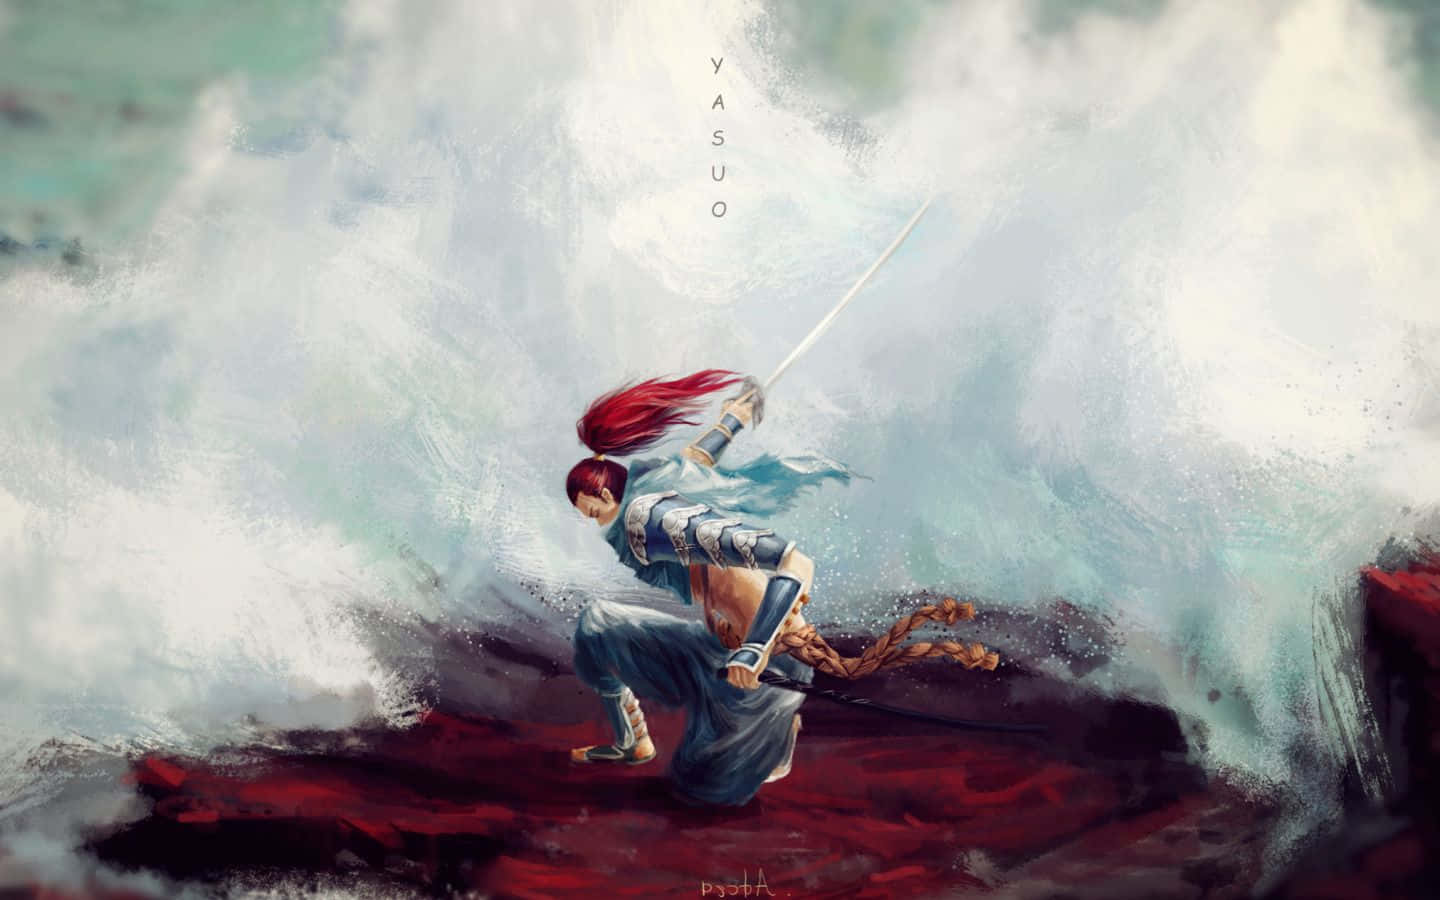 The Disciplined Blade—yasuo, The Unforgiven Wallpaper